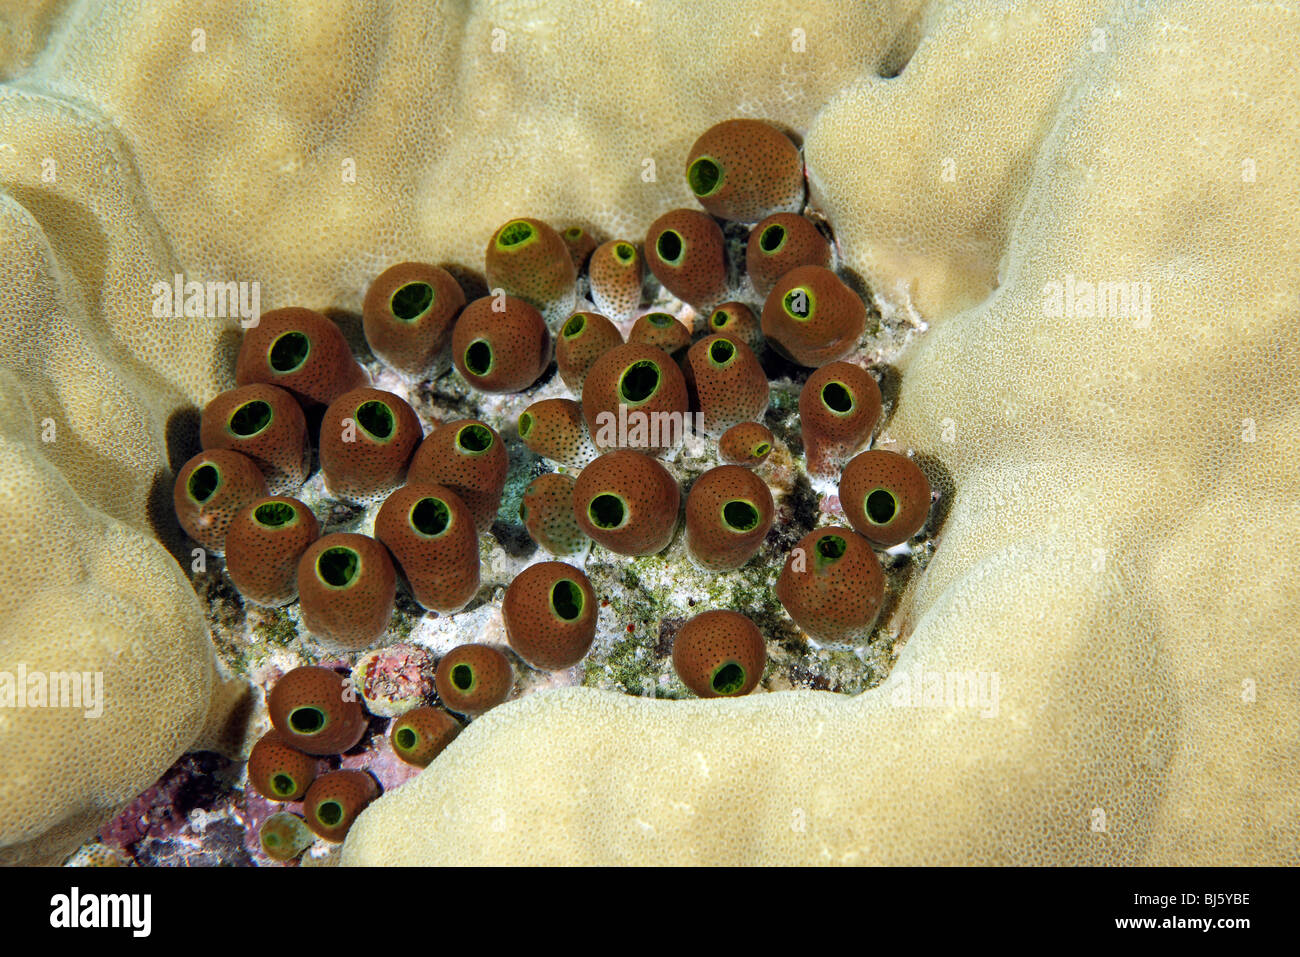 Colony of Ascidians, or Tunicates, Atriolum robustum, living among Porites Coral. Stock Photo